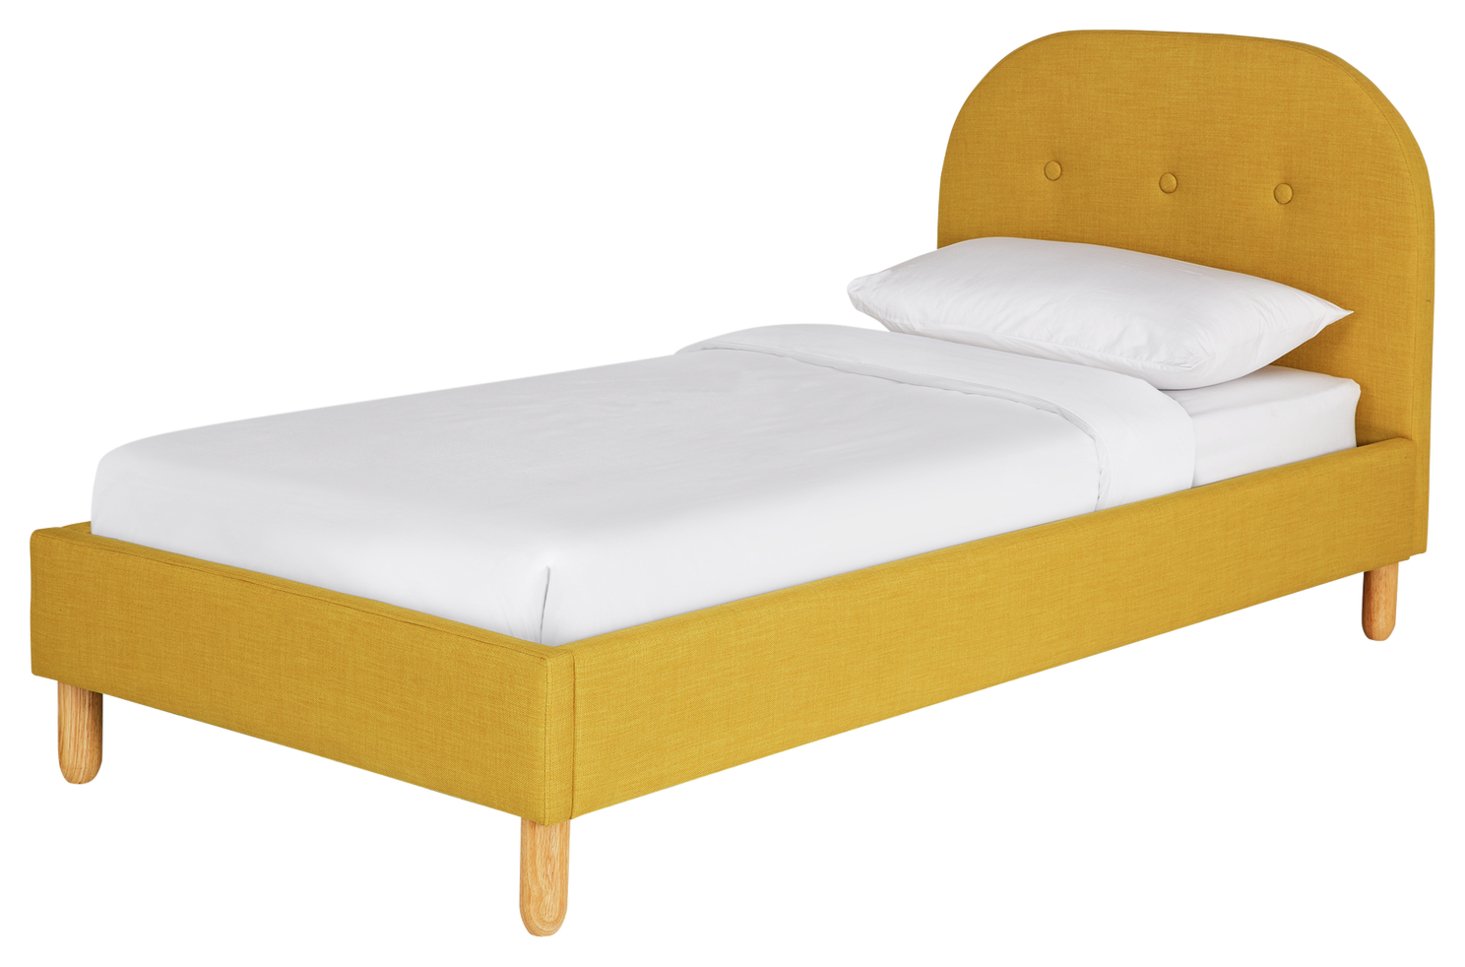 Habitat Elin Single Fabric Bed Frame - Mustard